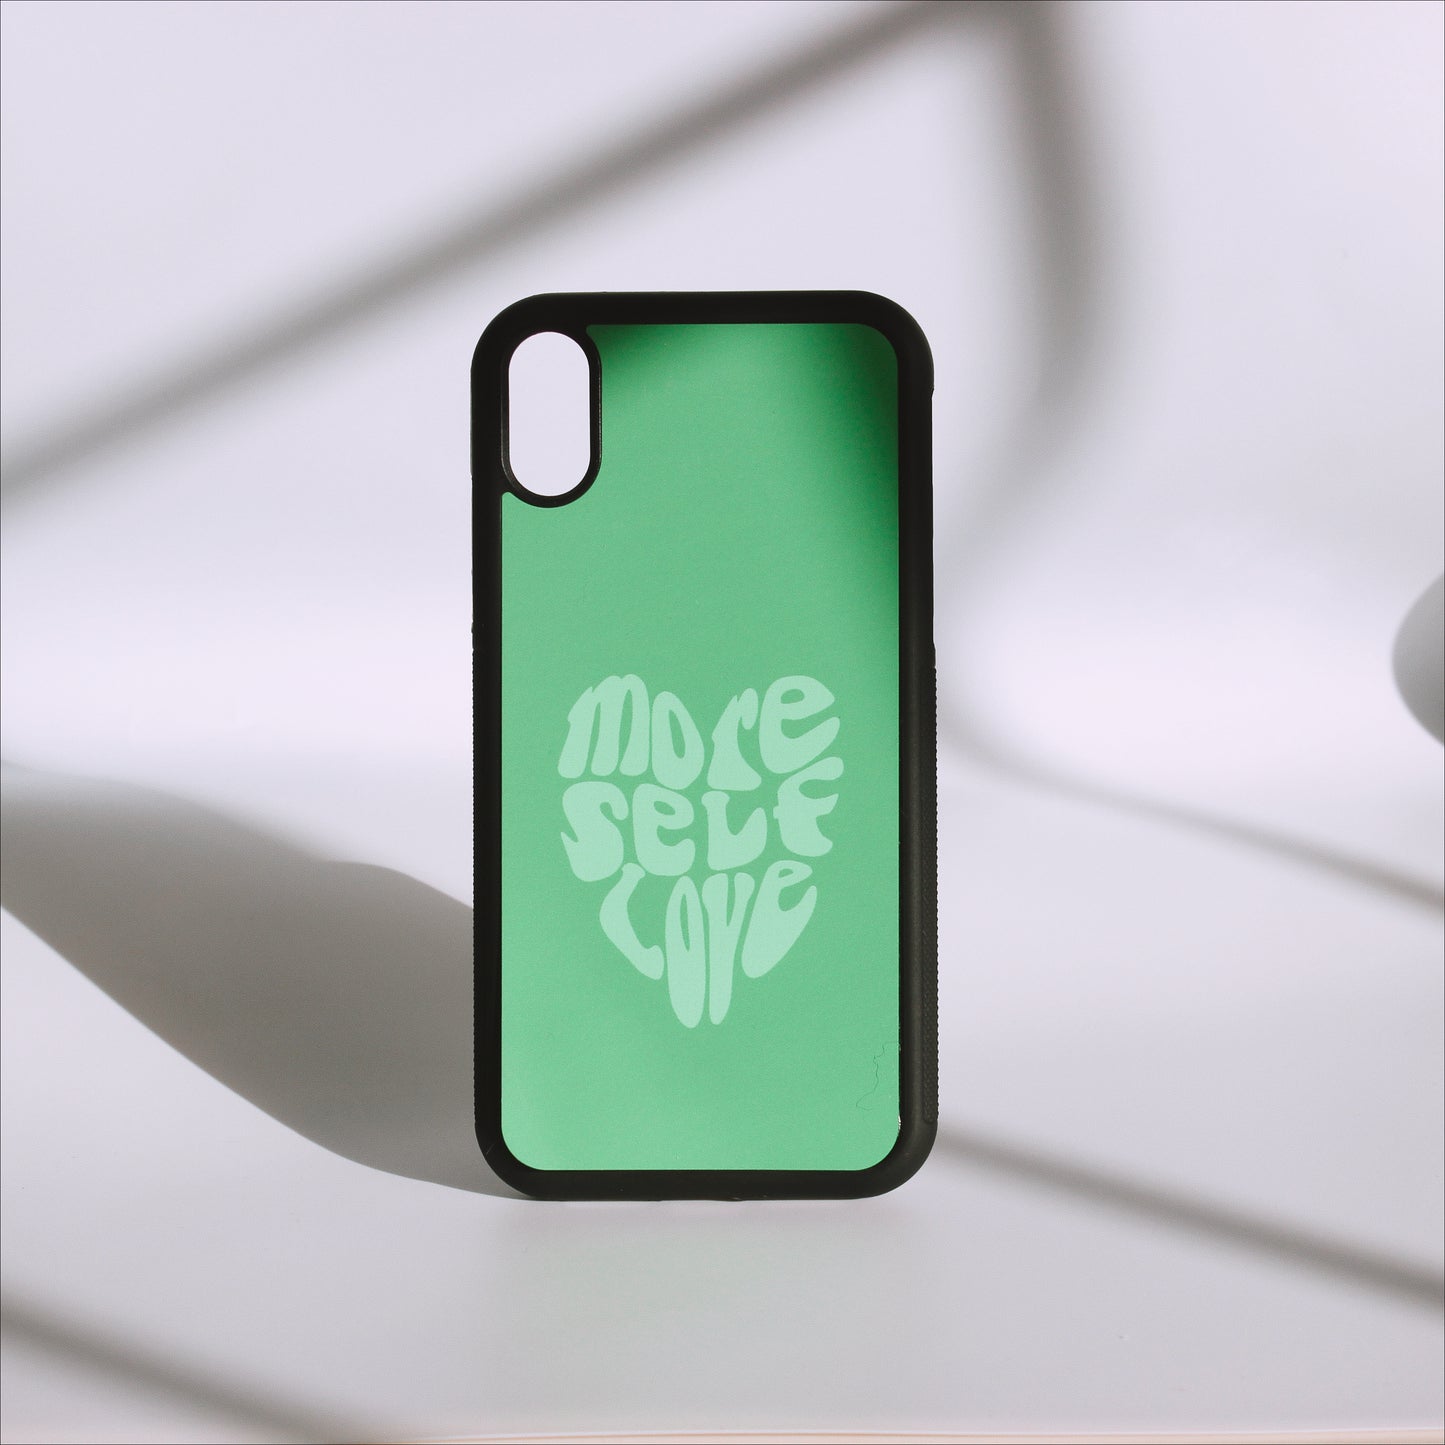 phone, phone case, iPhone, iPhone case, phone accessories, aesthetic phone case, trendy phone case, more self love phone case, more self love, self love, love, heart, green